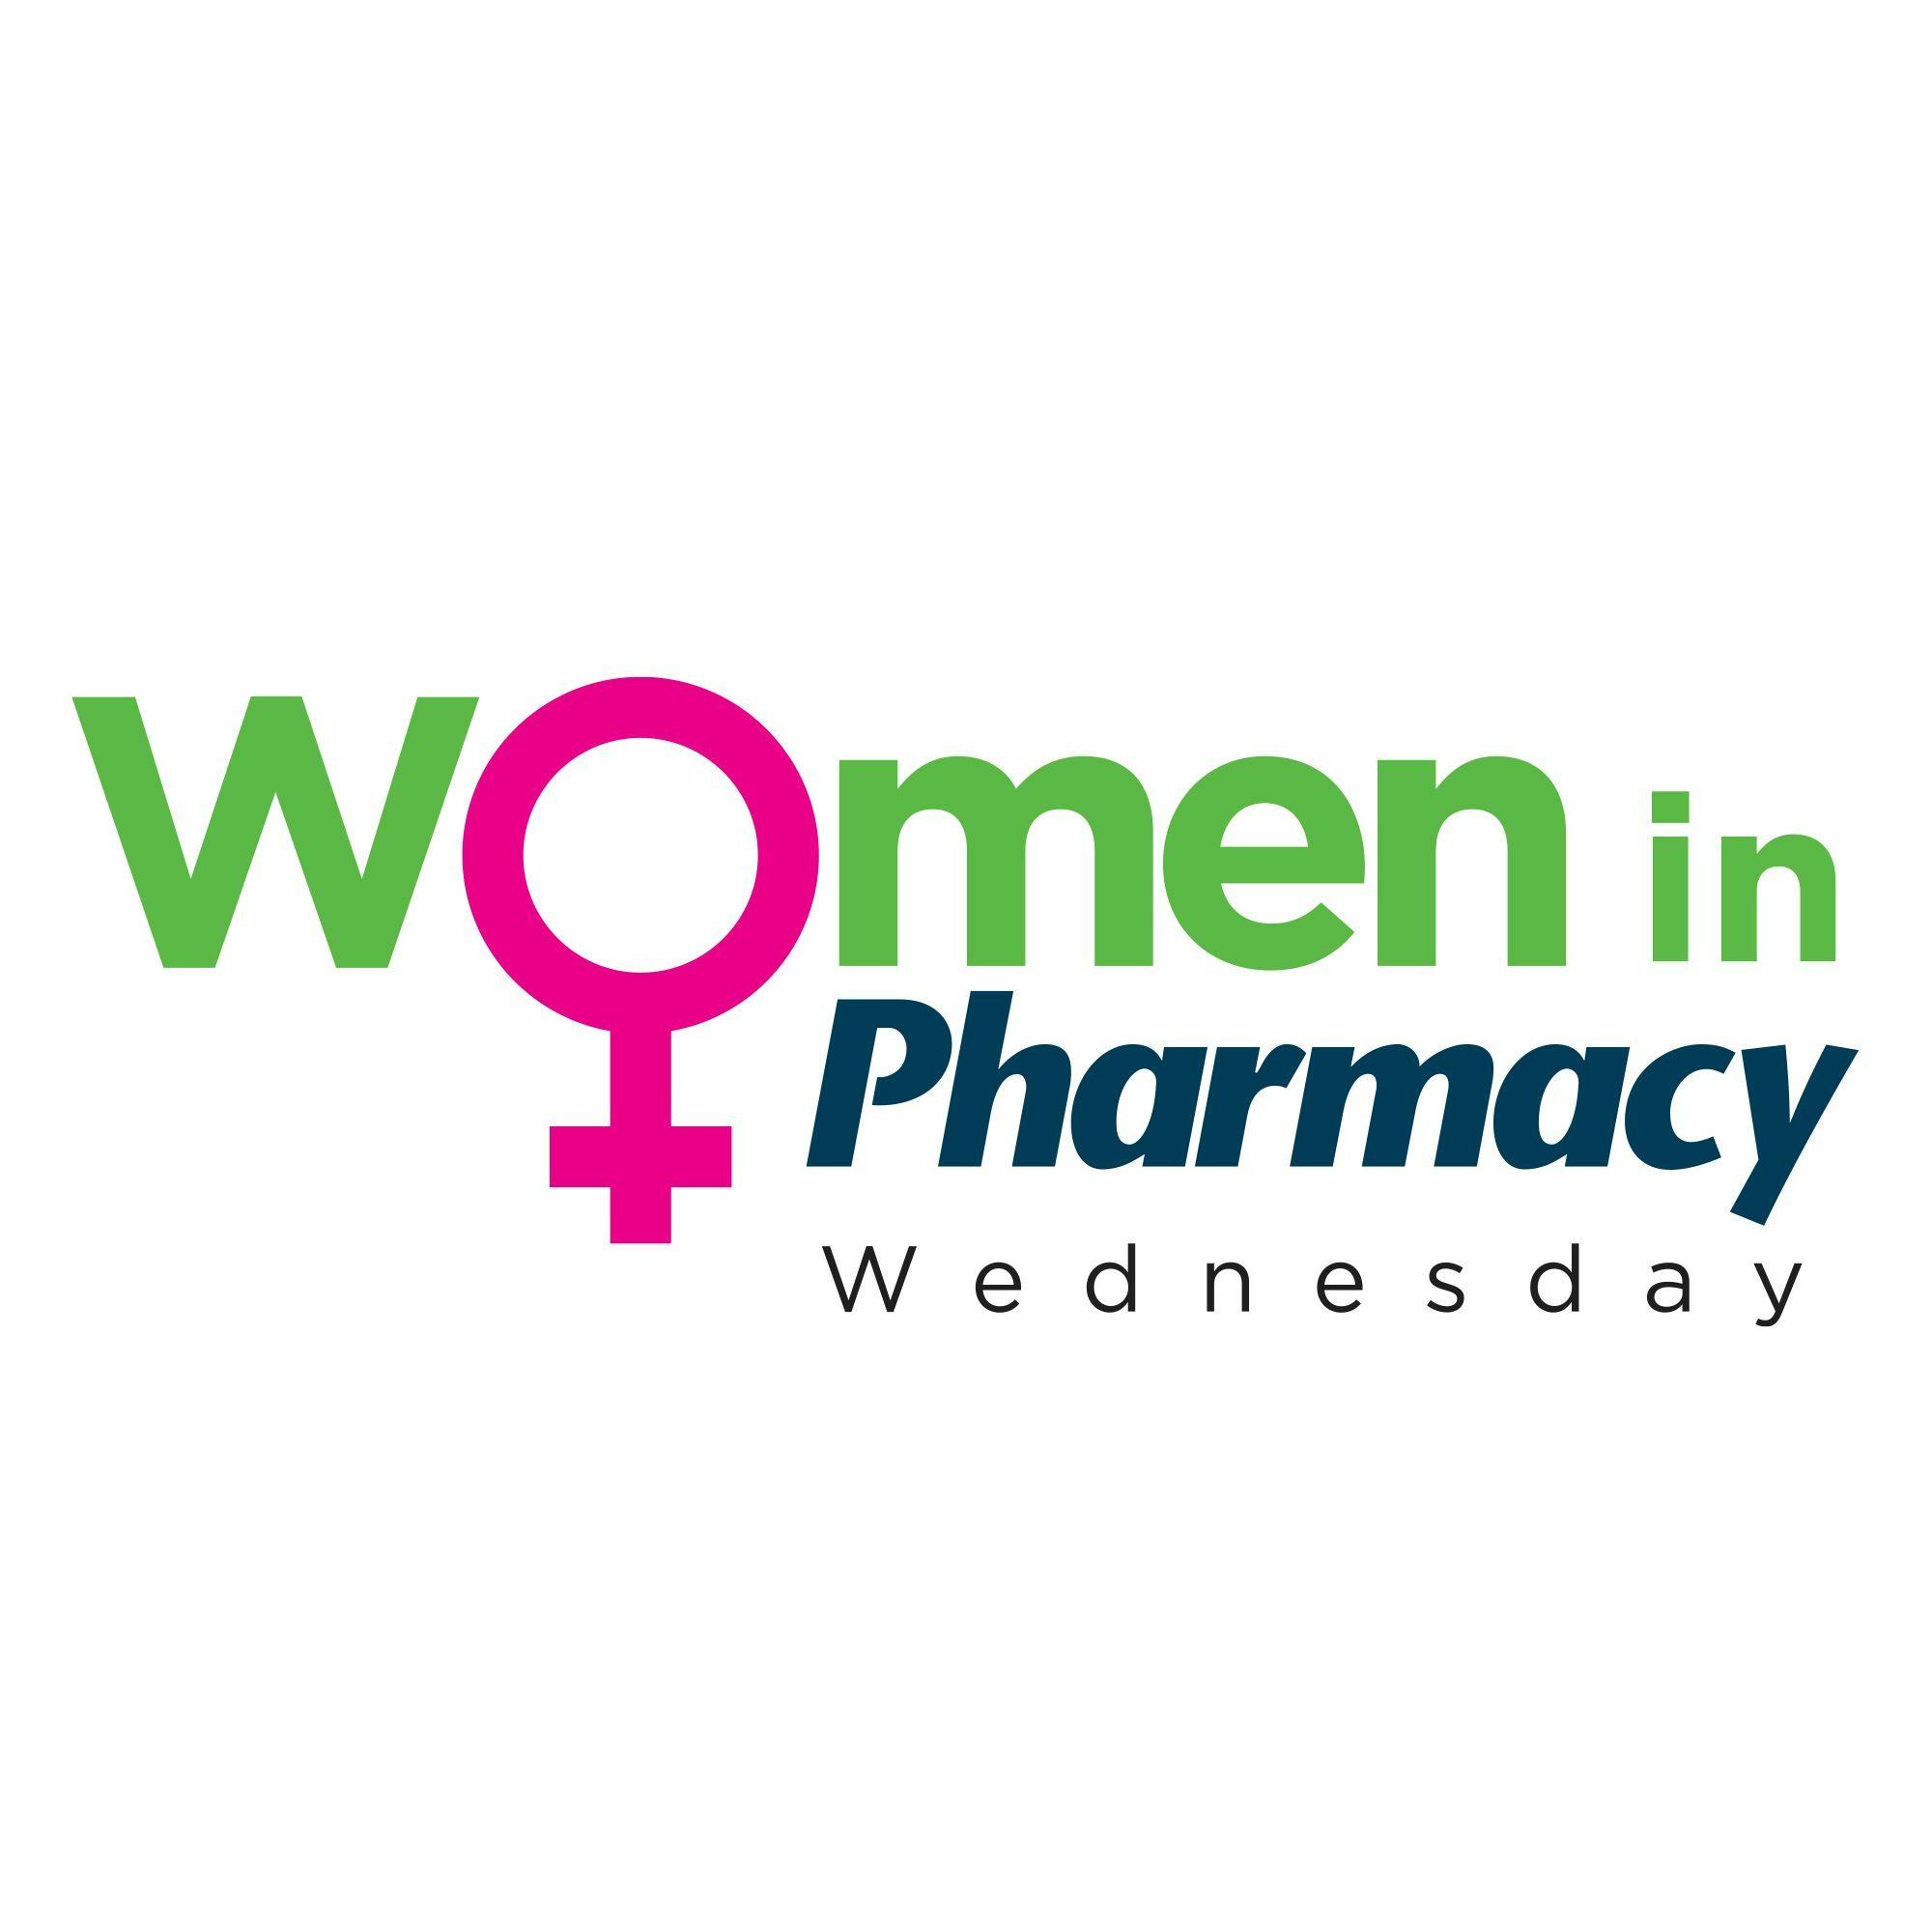 Pharmacy Focus Podcast: New Series - Women in Pharmacy Wednesday